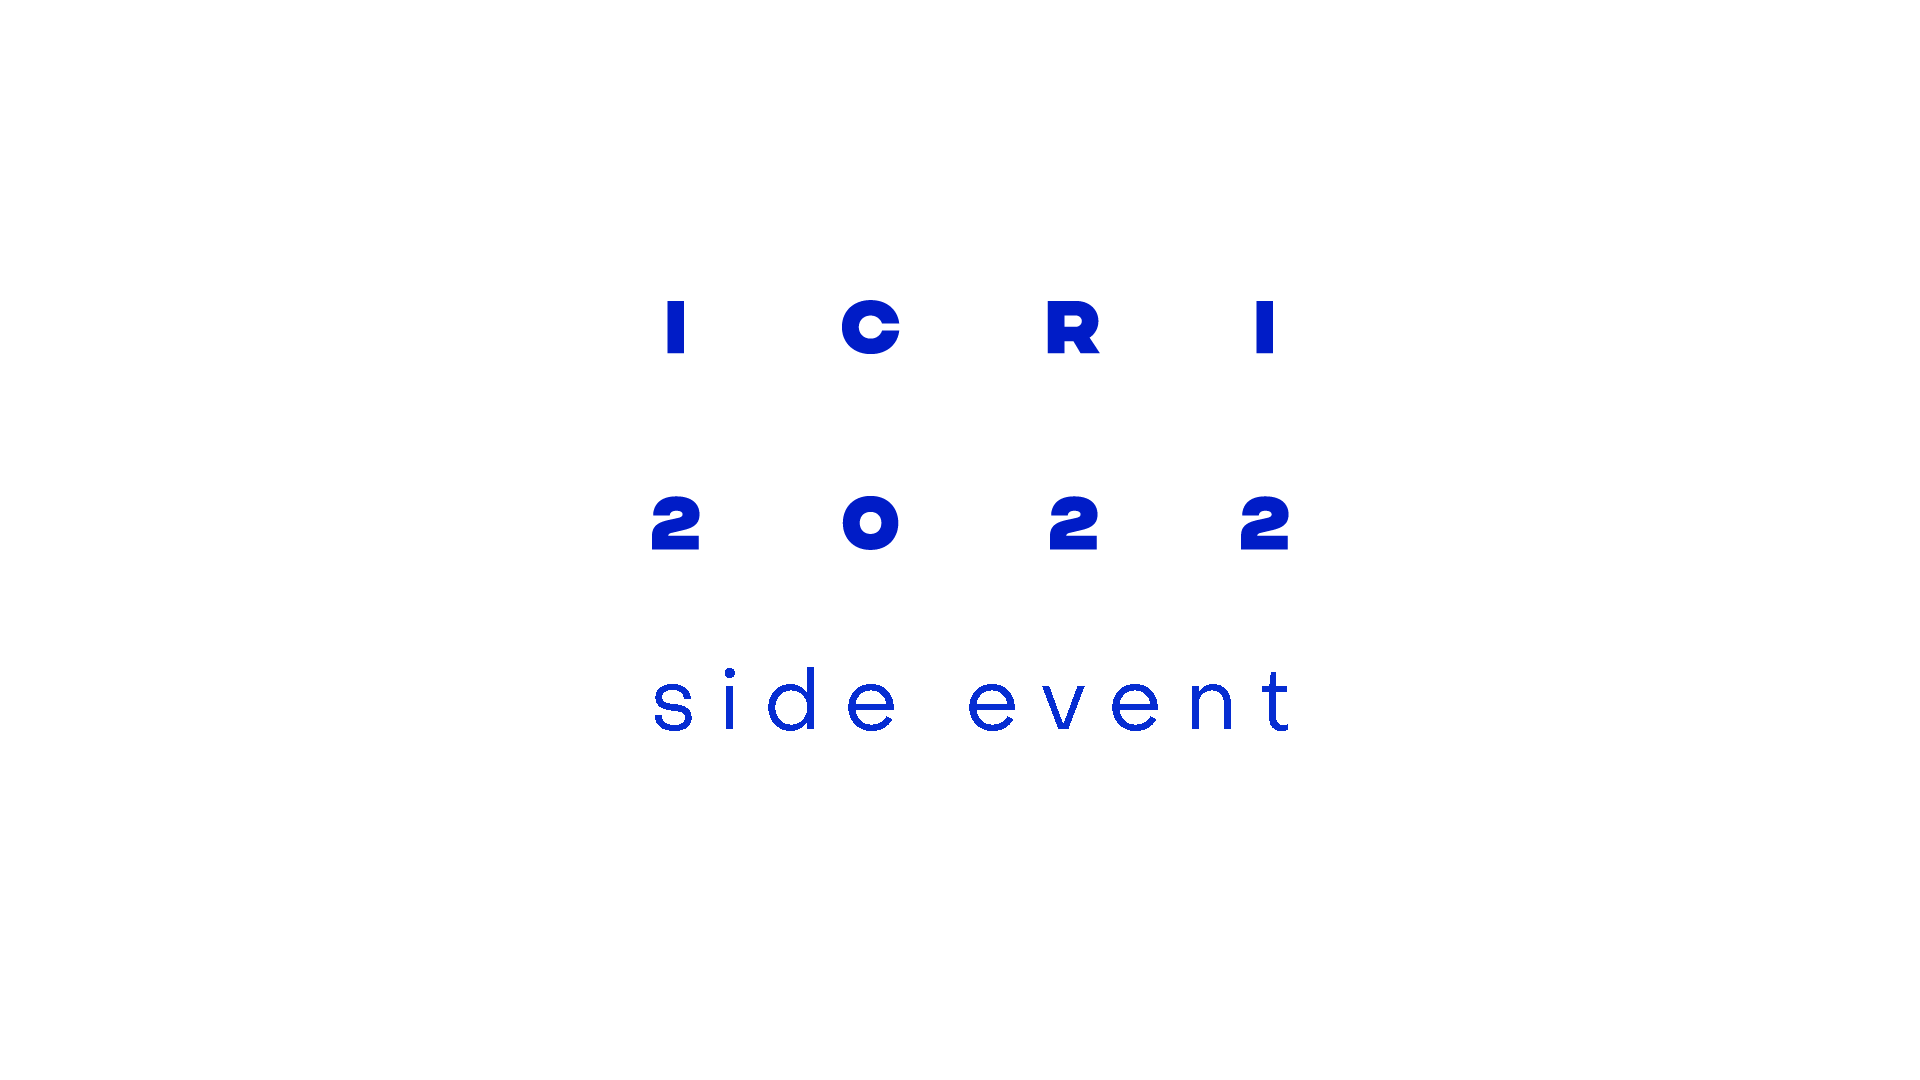 icri side event logo 